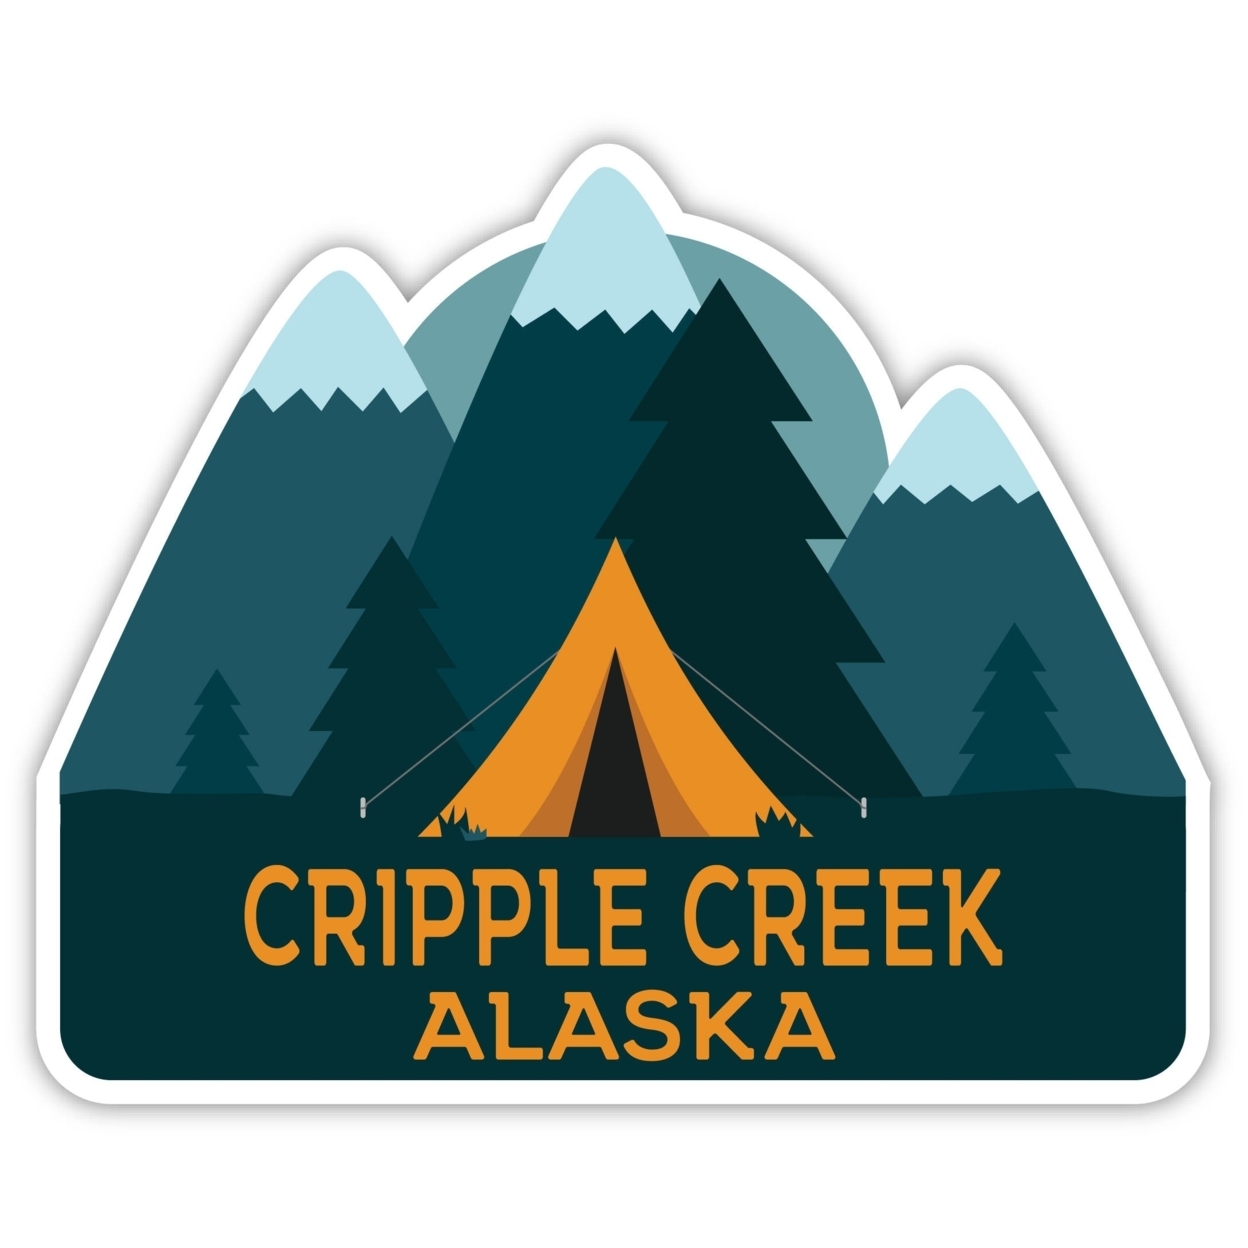 Cripple Creek Alaska Souvenir Decorative Stickers (Choose Theme And Size) - 4-Pack, 8-Inch, Tent